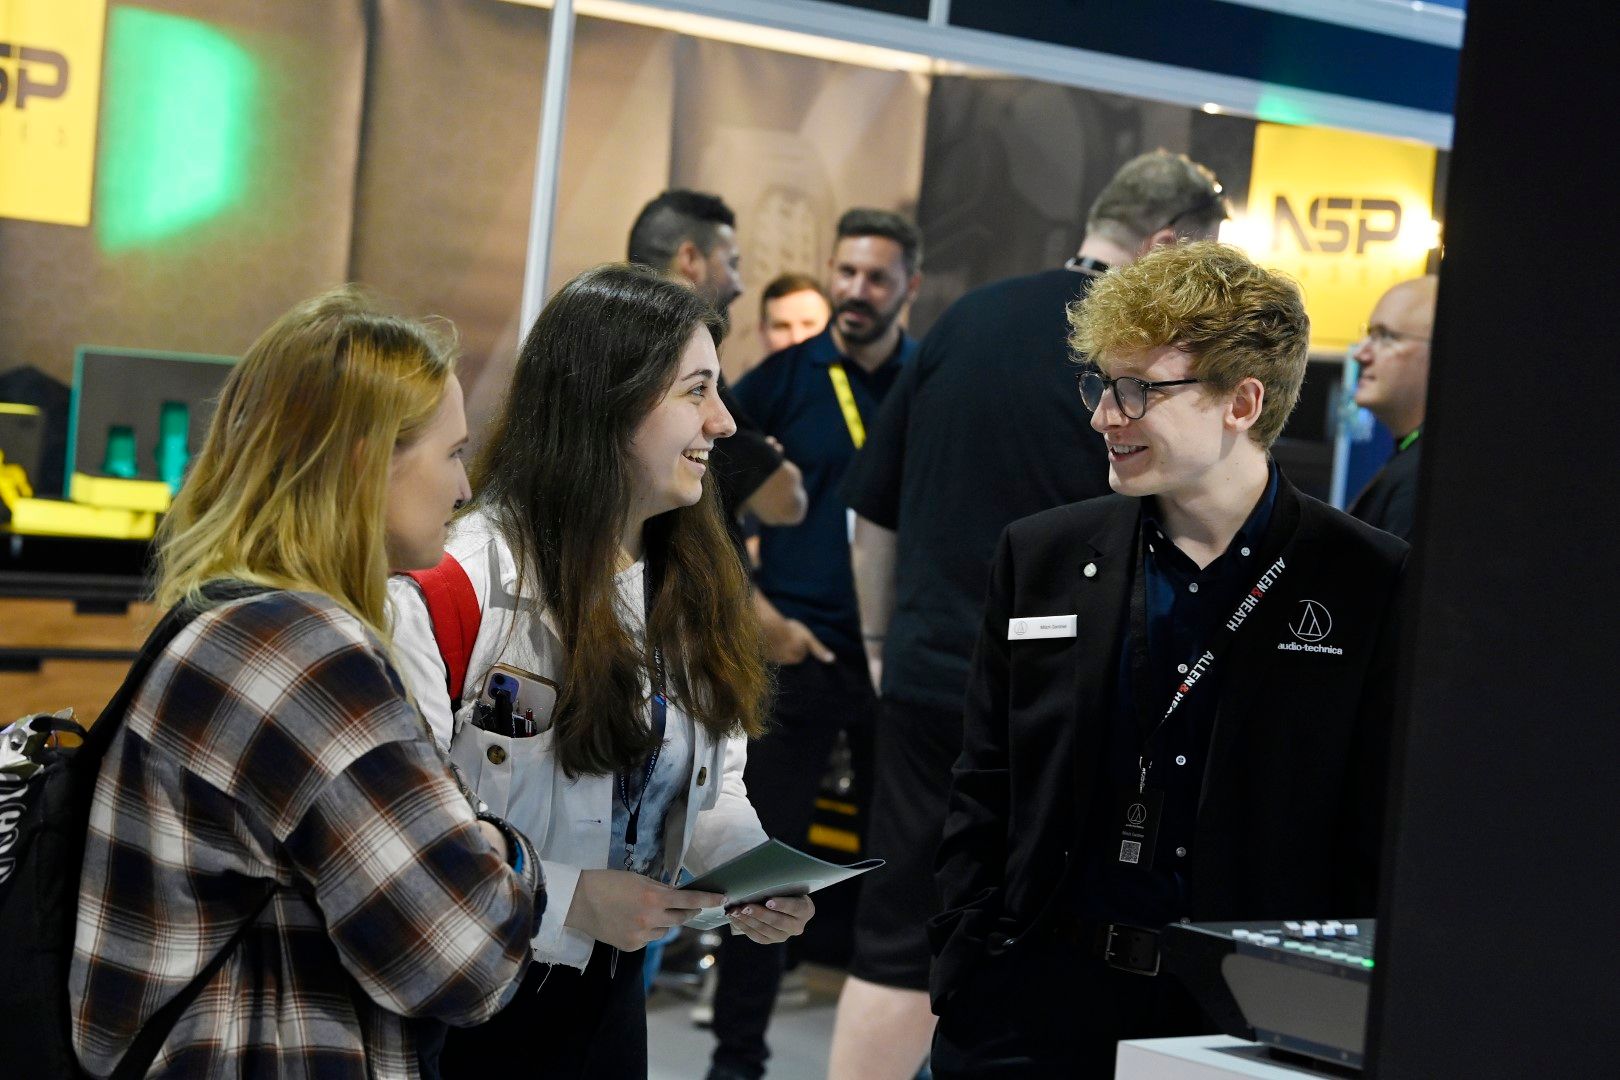 Students talking to an audio technica exhibitor at PLASA Focus Leeds